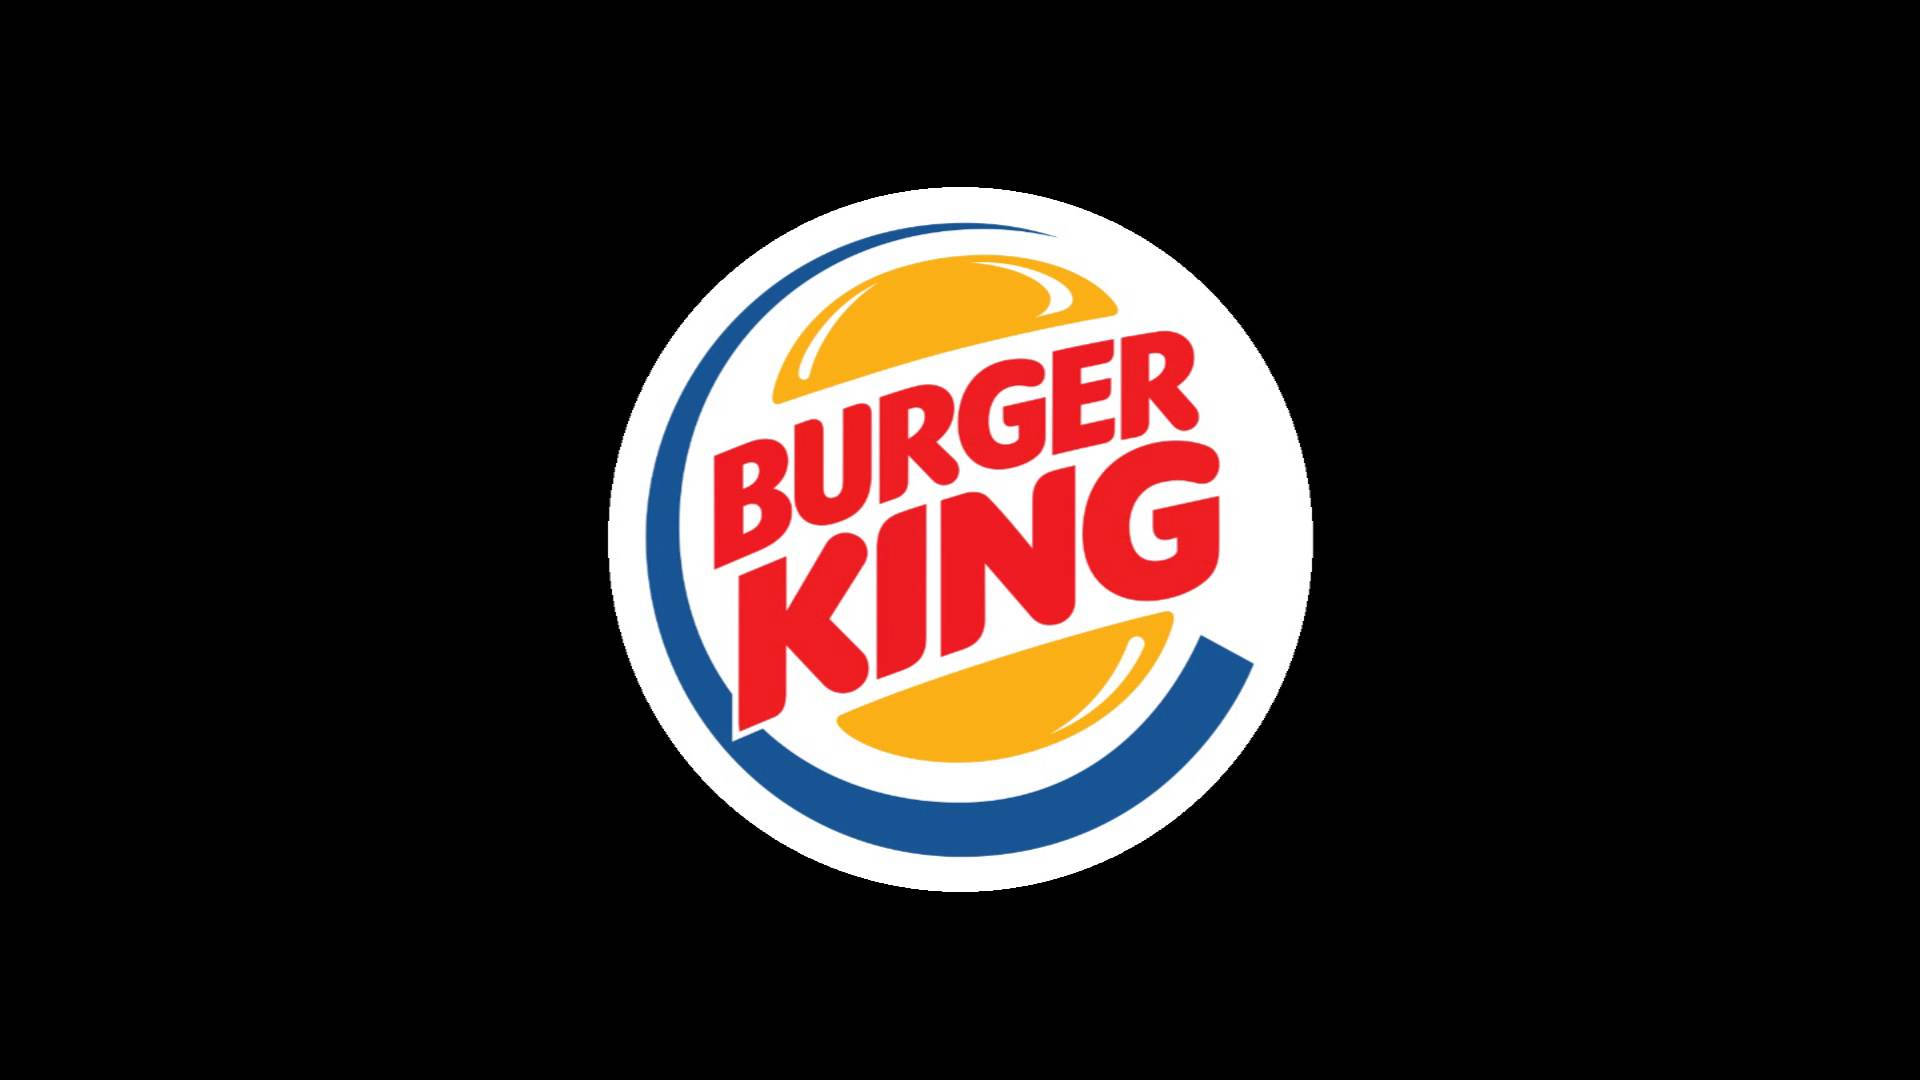 Burger King Background Photos